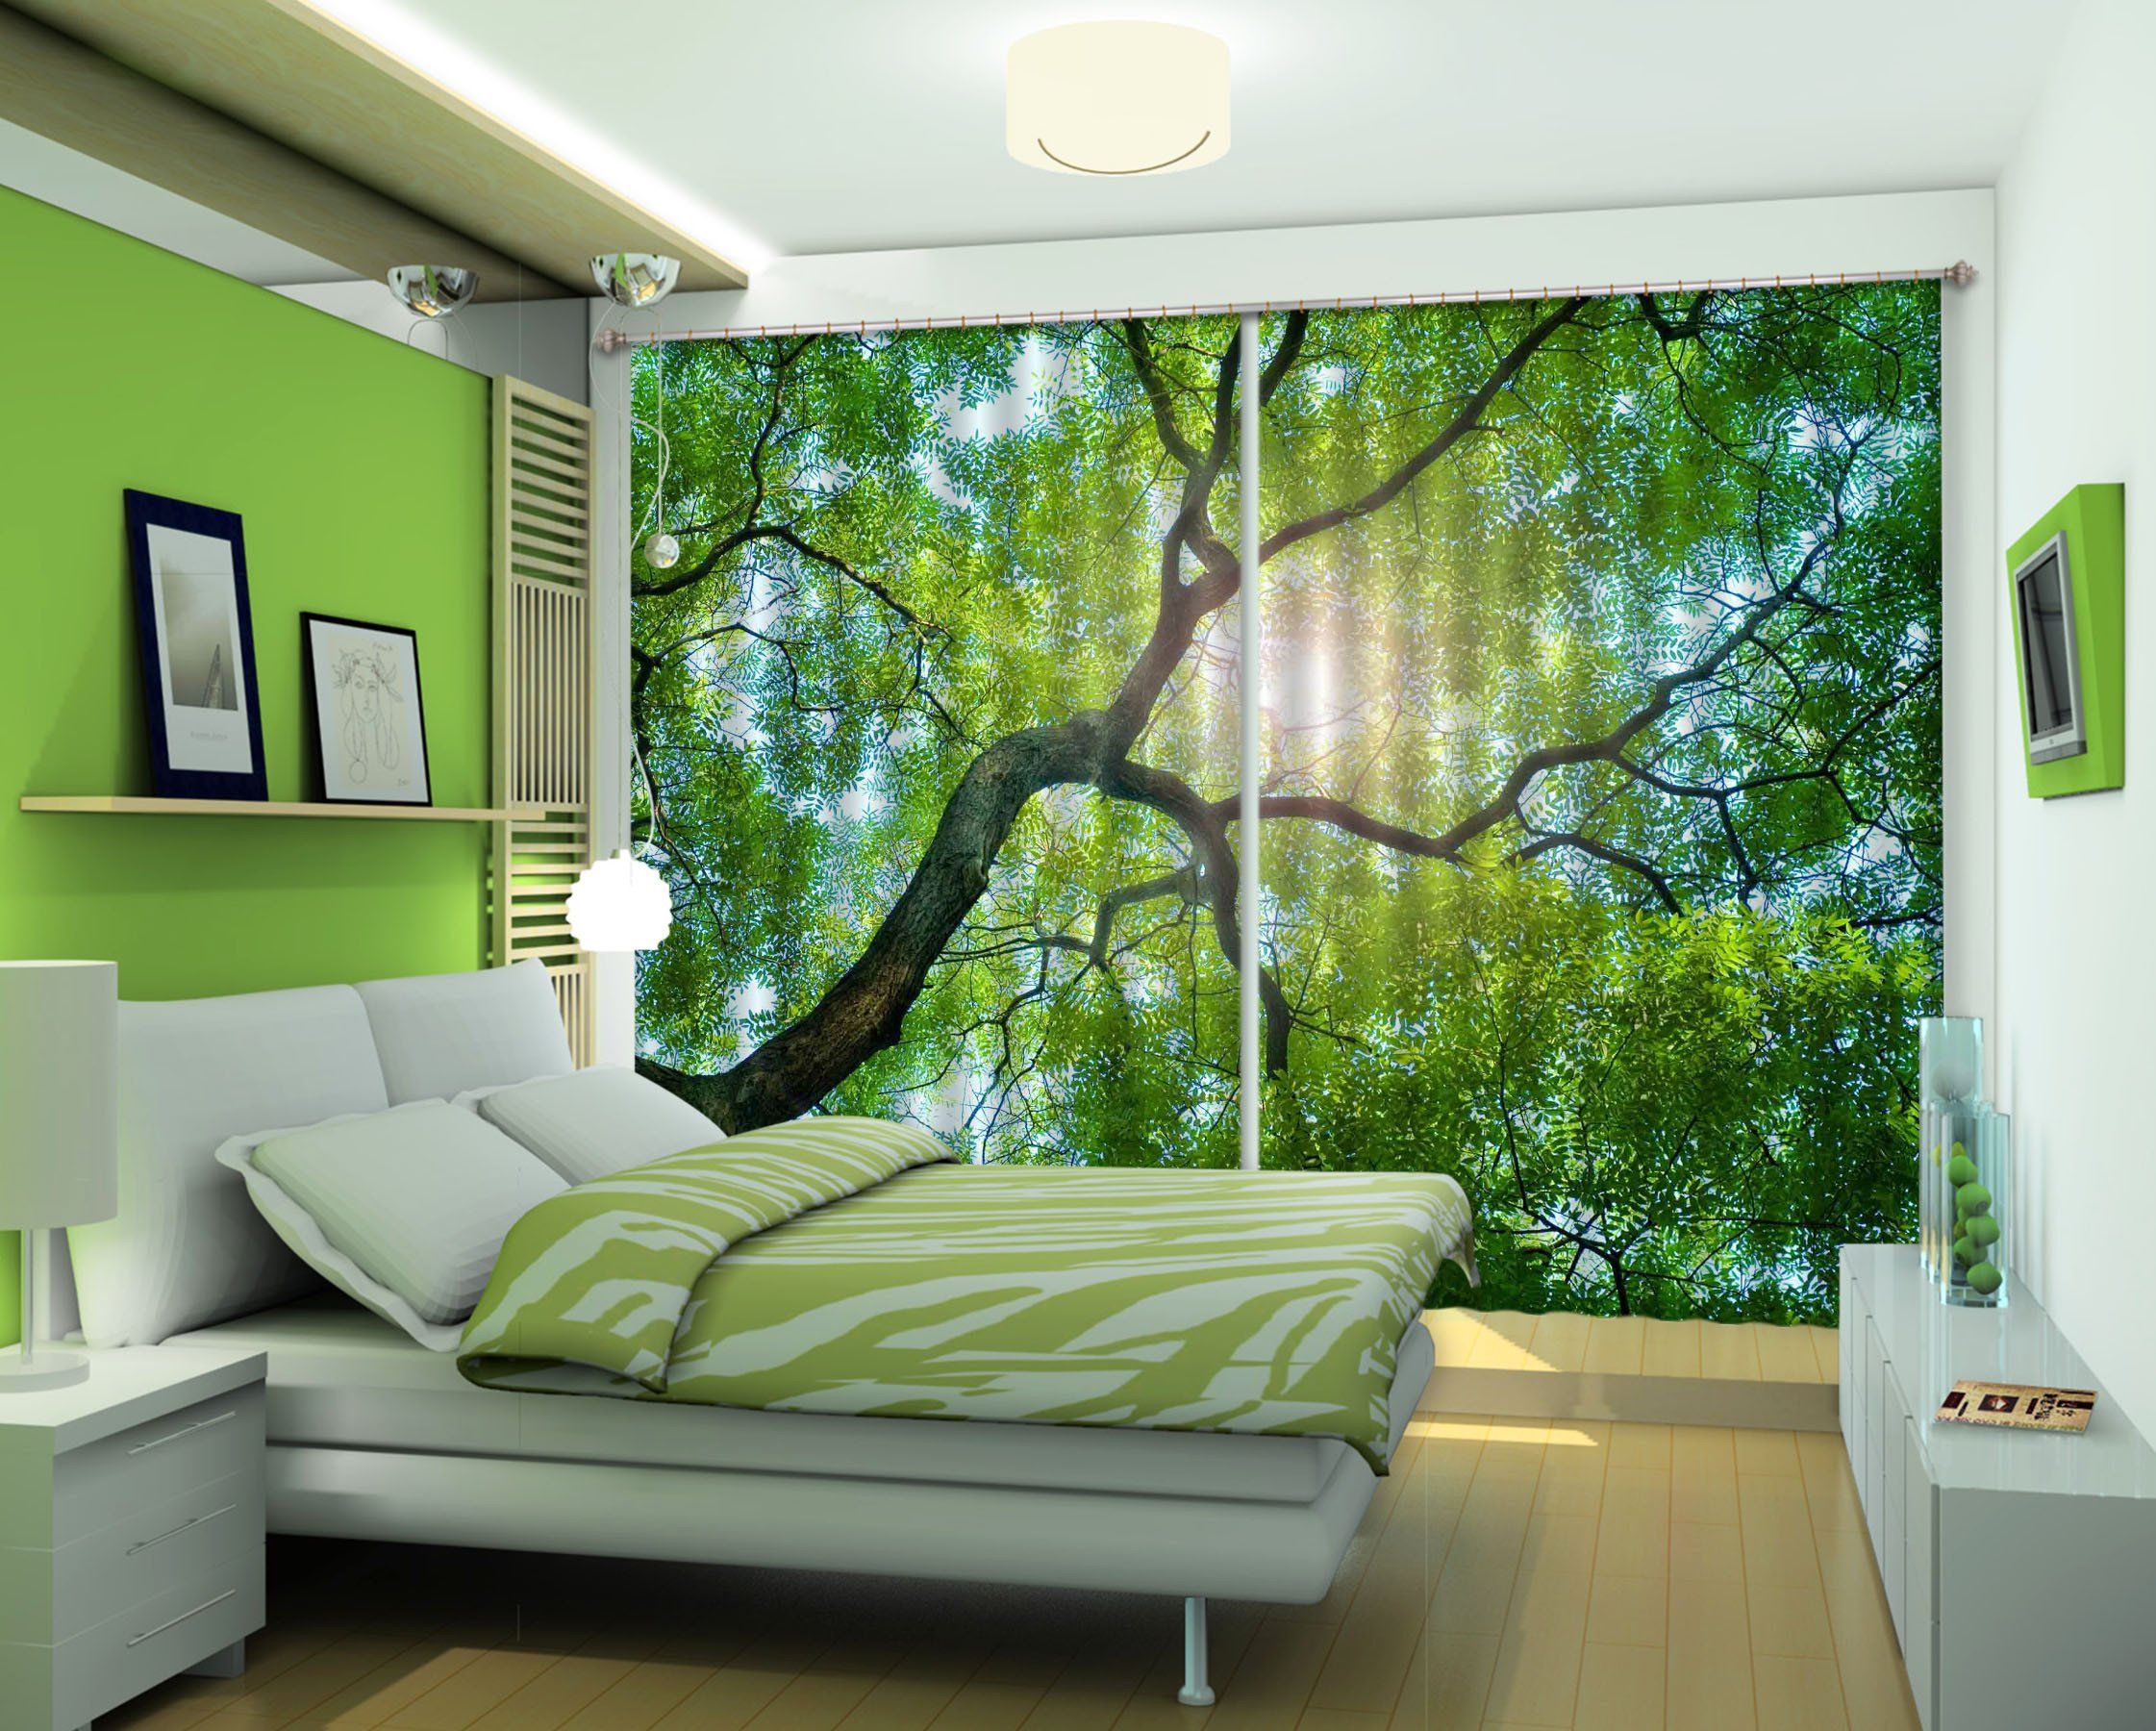 3D Lush Green Tree 500 Curtains Drapes Wallpaper AJ Wallpaper 